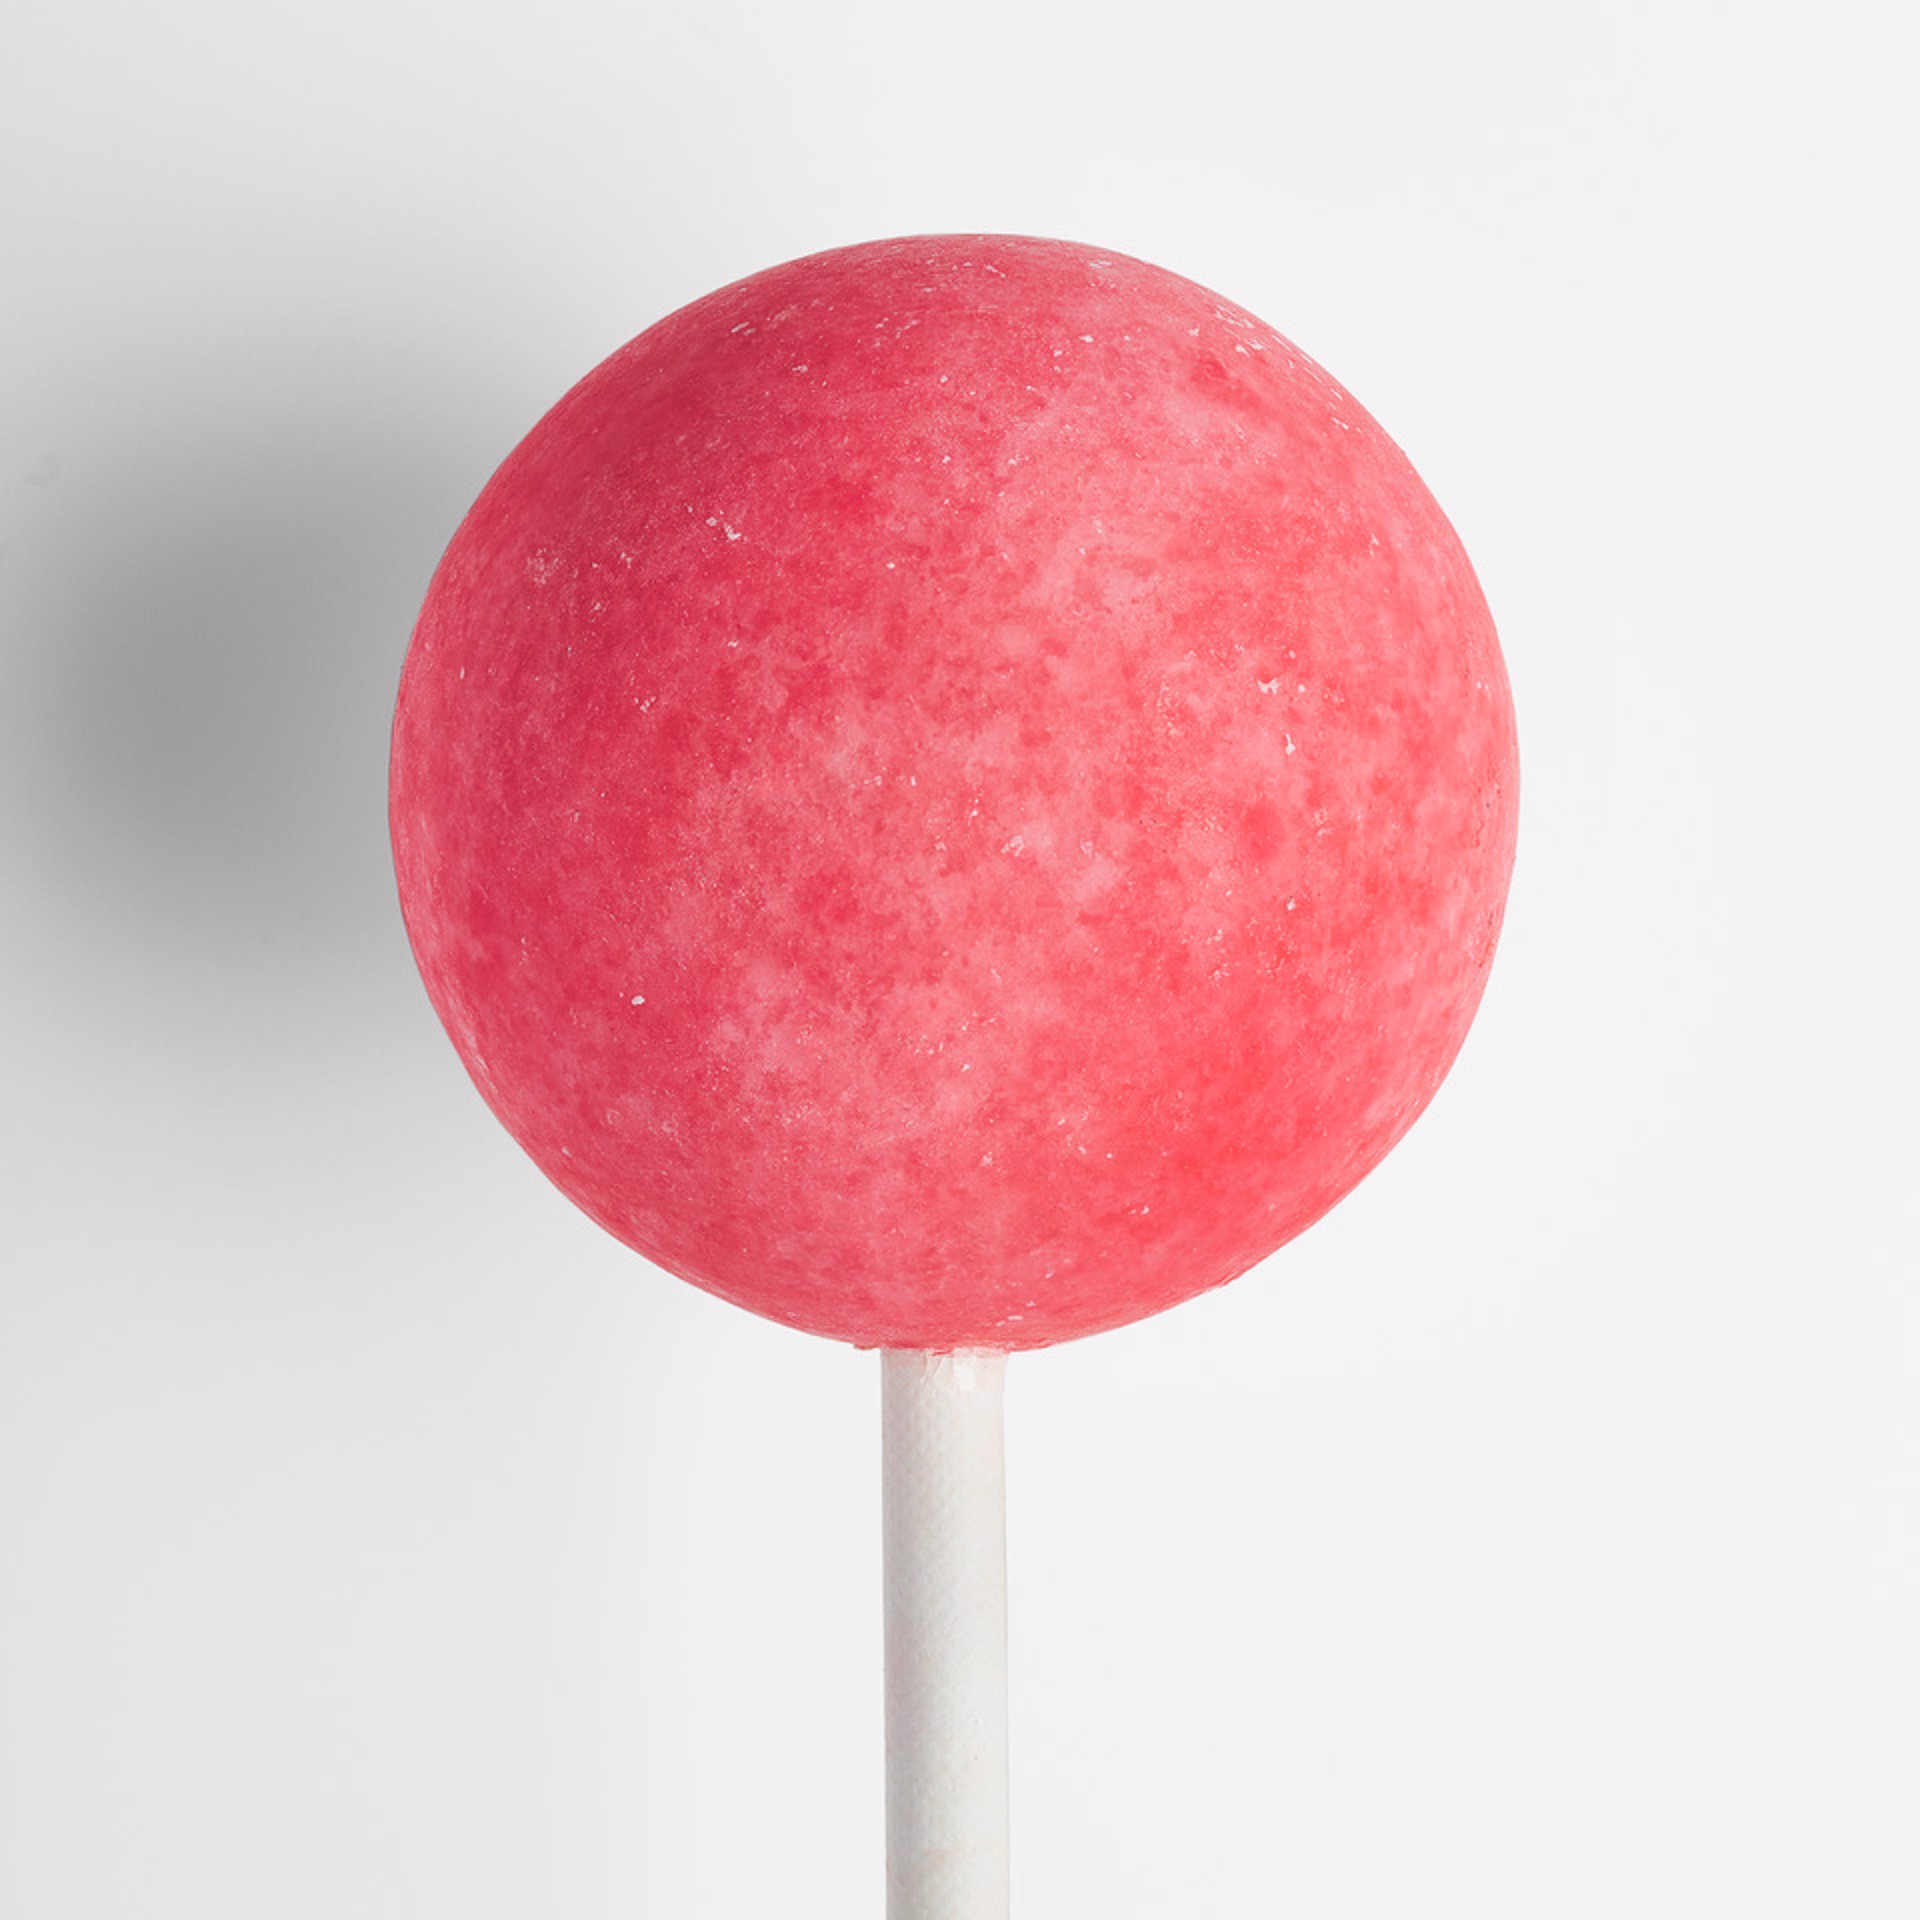 Pink Lollipop by Peter Andrew Lusztyk / Refined Sugar